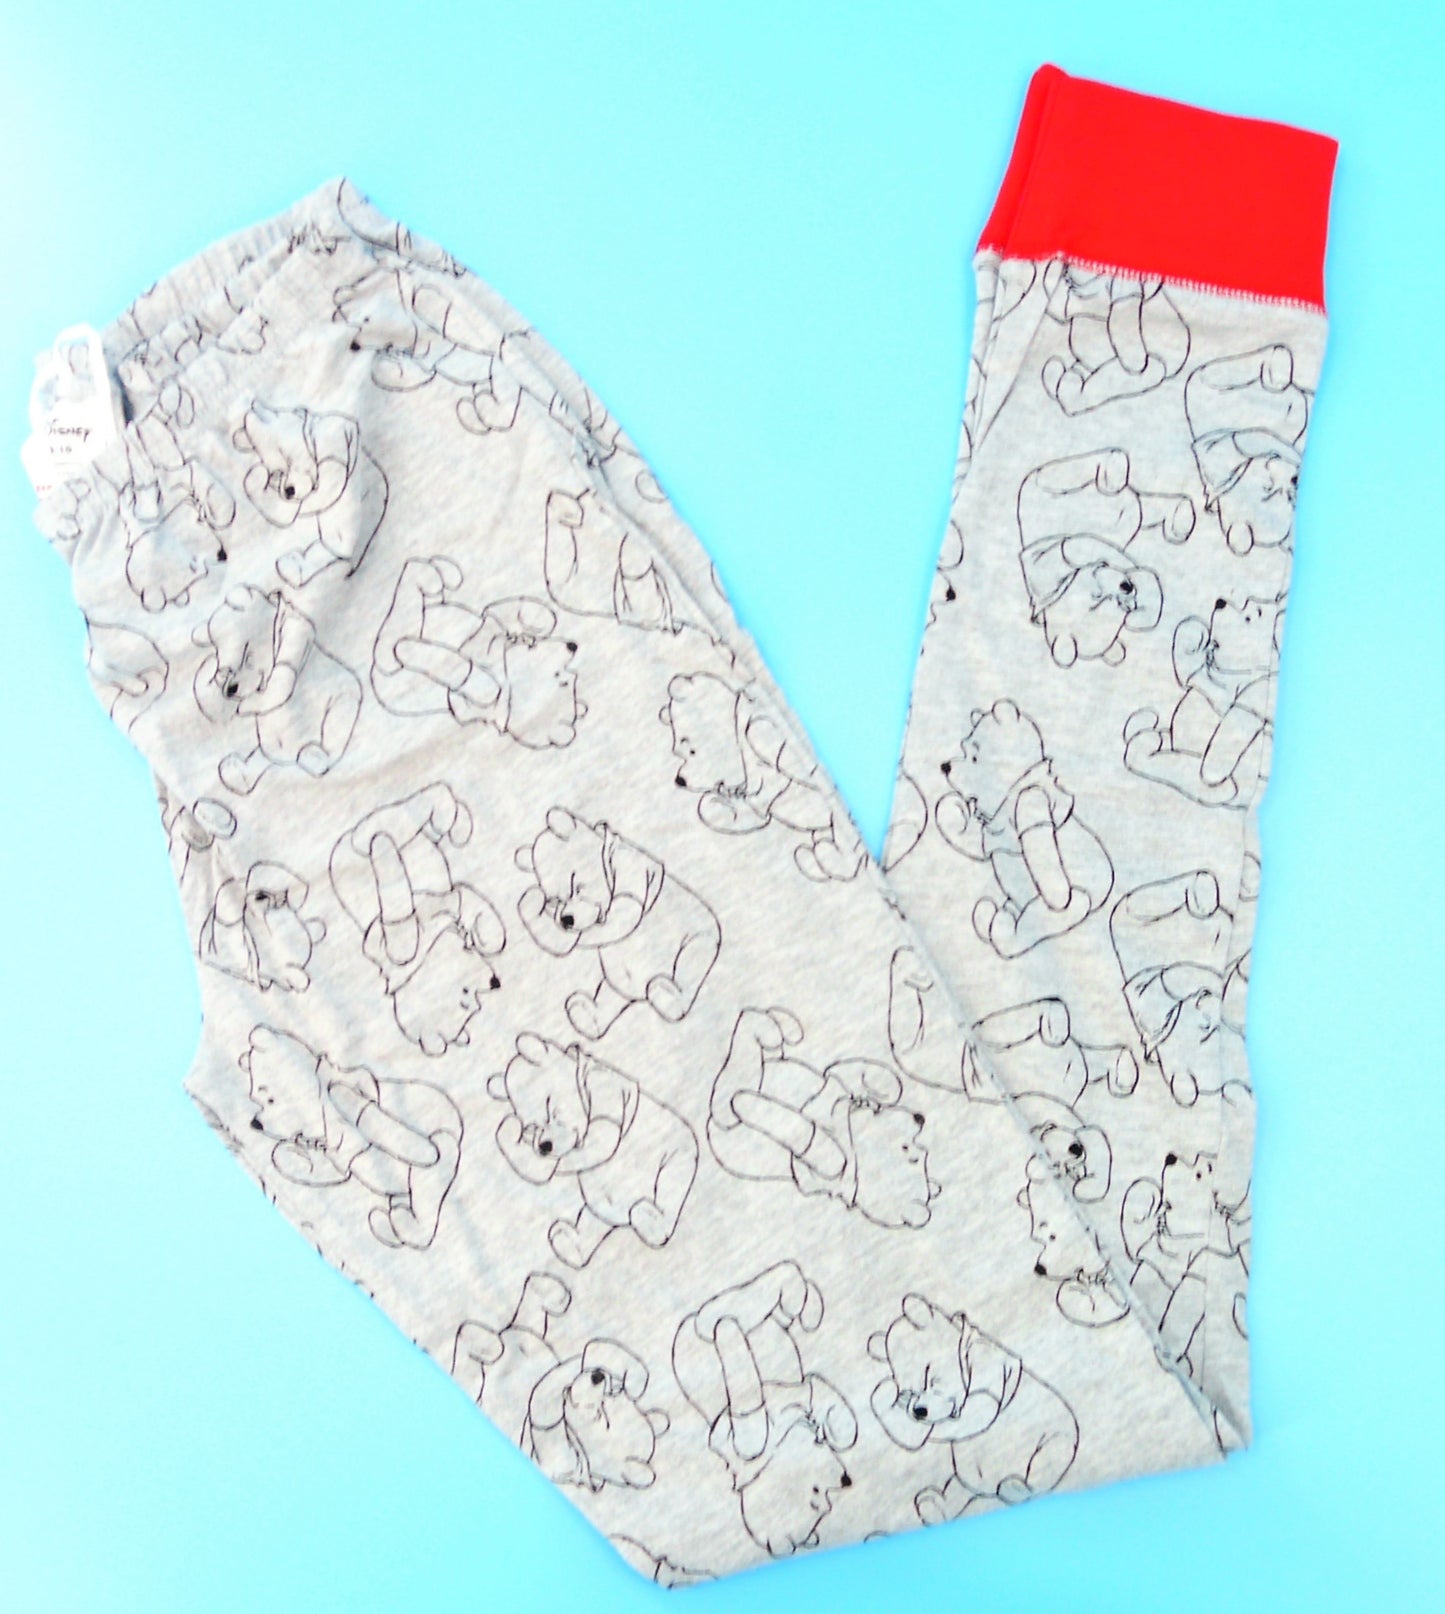 Disney Winnie the Pooh "Oh Bother" Ladies Pyjama Set - Great Gift Idea